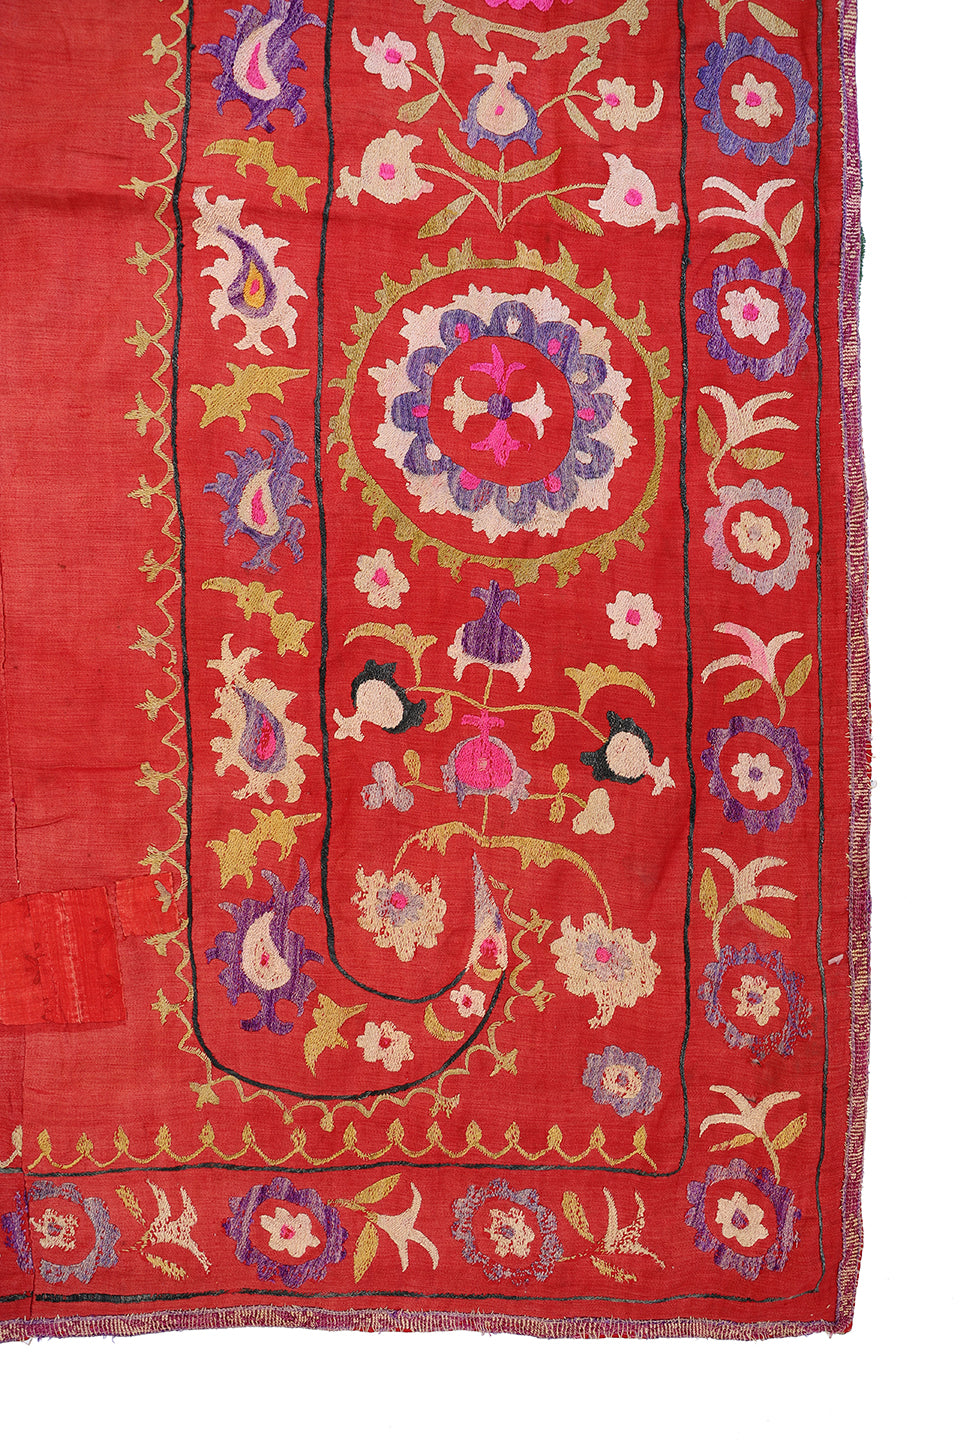 3'x5' Uzbek Suzani Prayer Textile